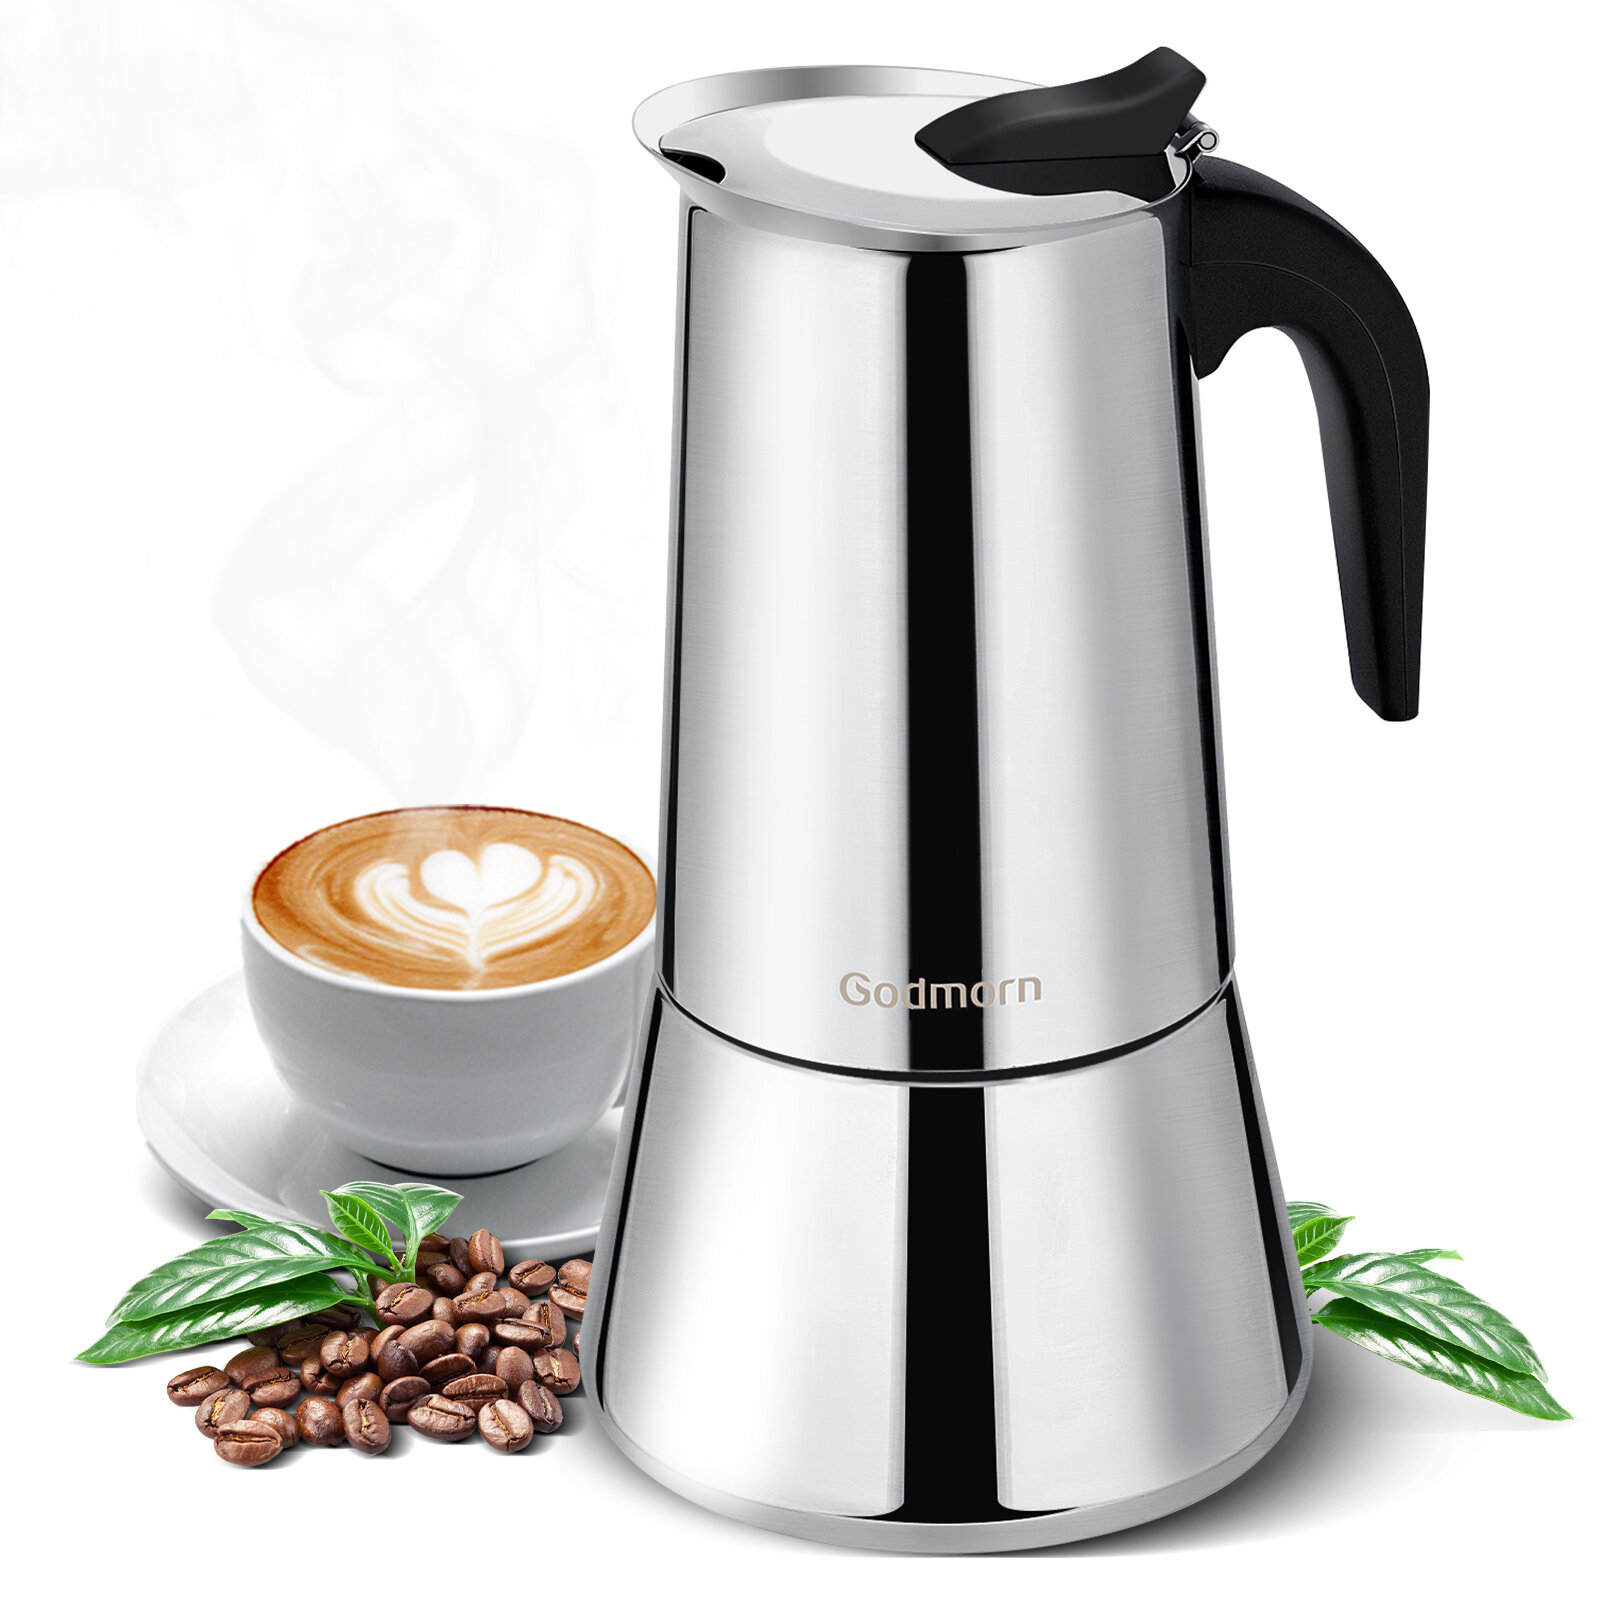 

Godmorn Stovetop Espresso Maker, 12cup/600ml Grecas Coffee Maker Moka Pot, Stainless Steel Italian Classic Espresso Moka